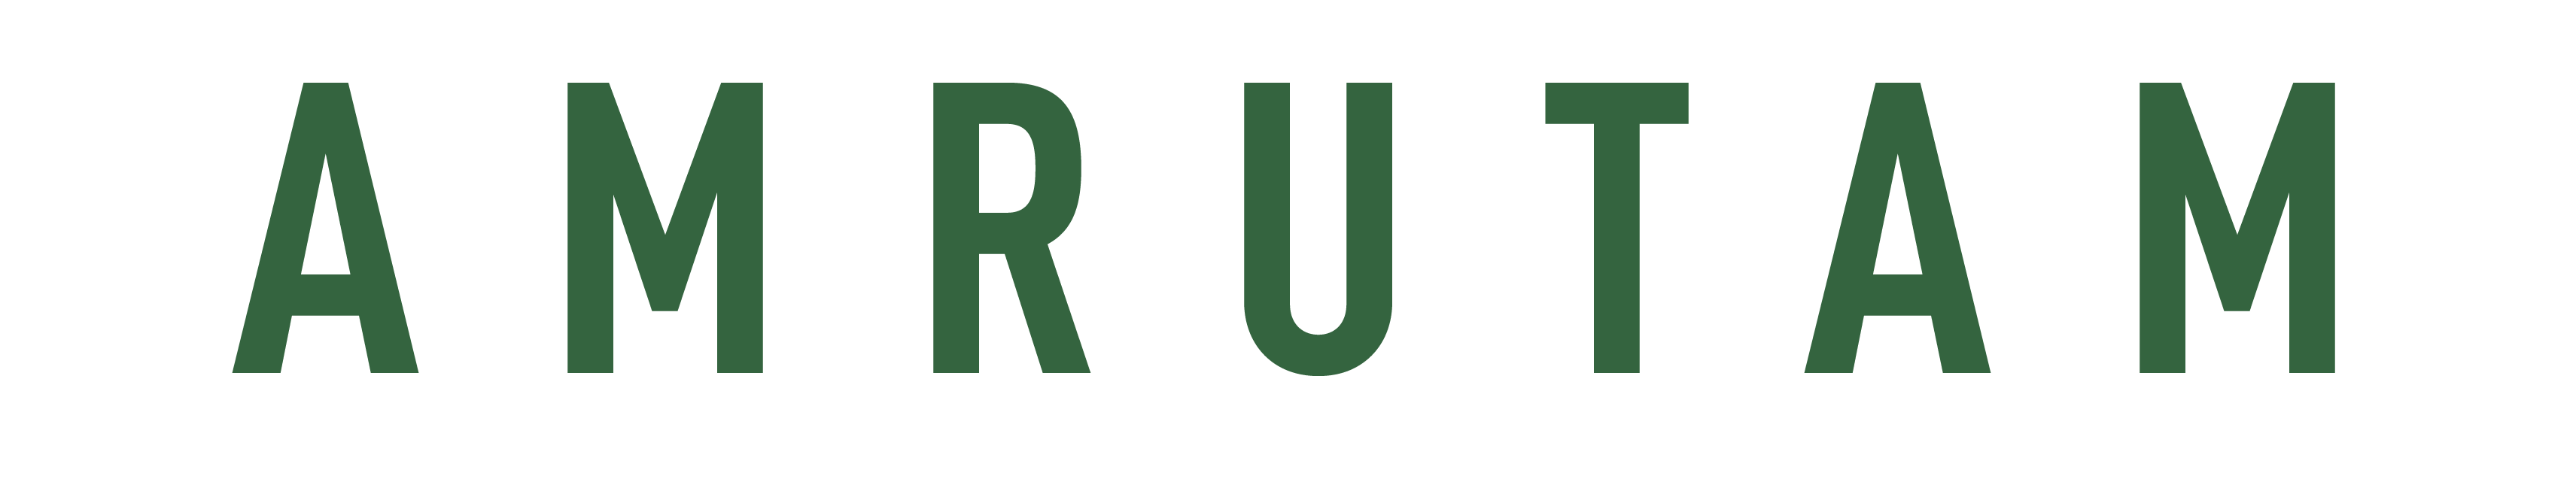 AMRUTAM coupons logo